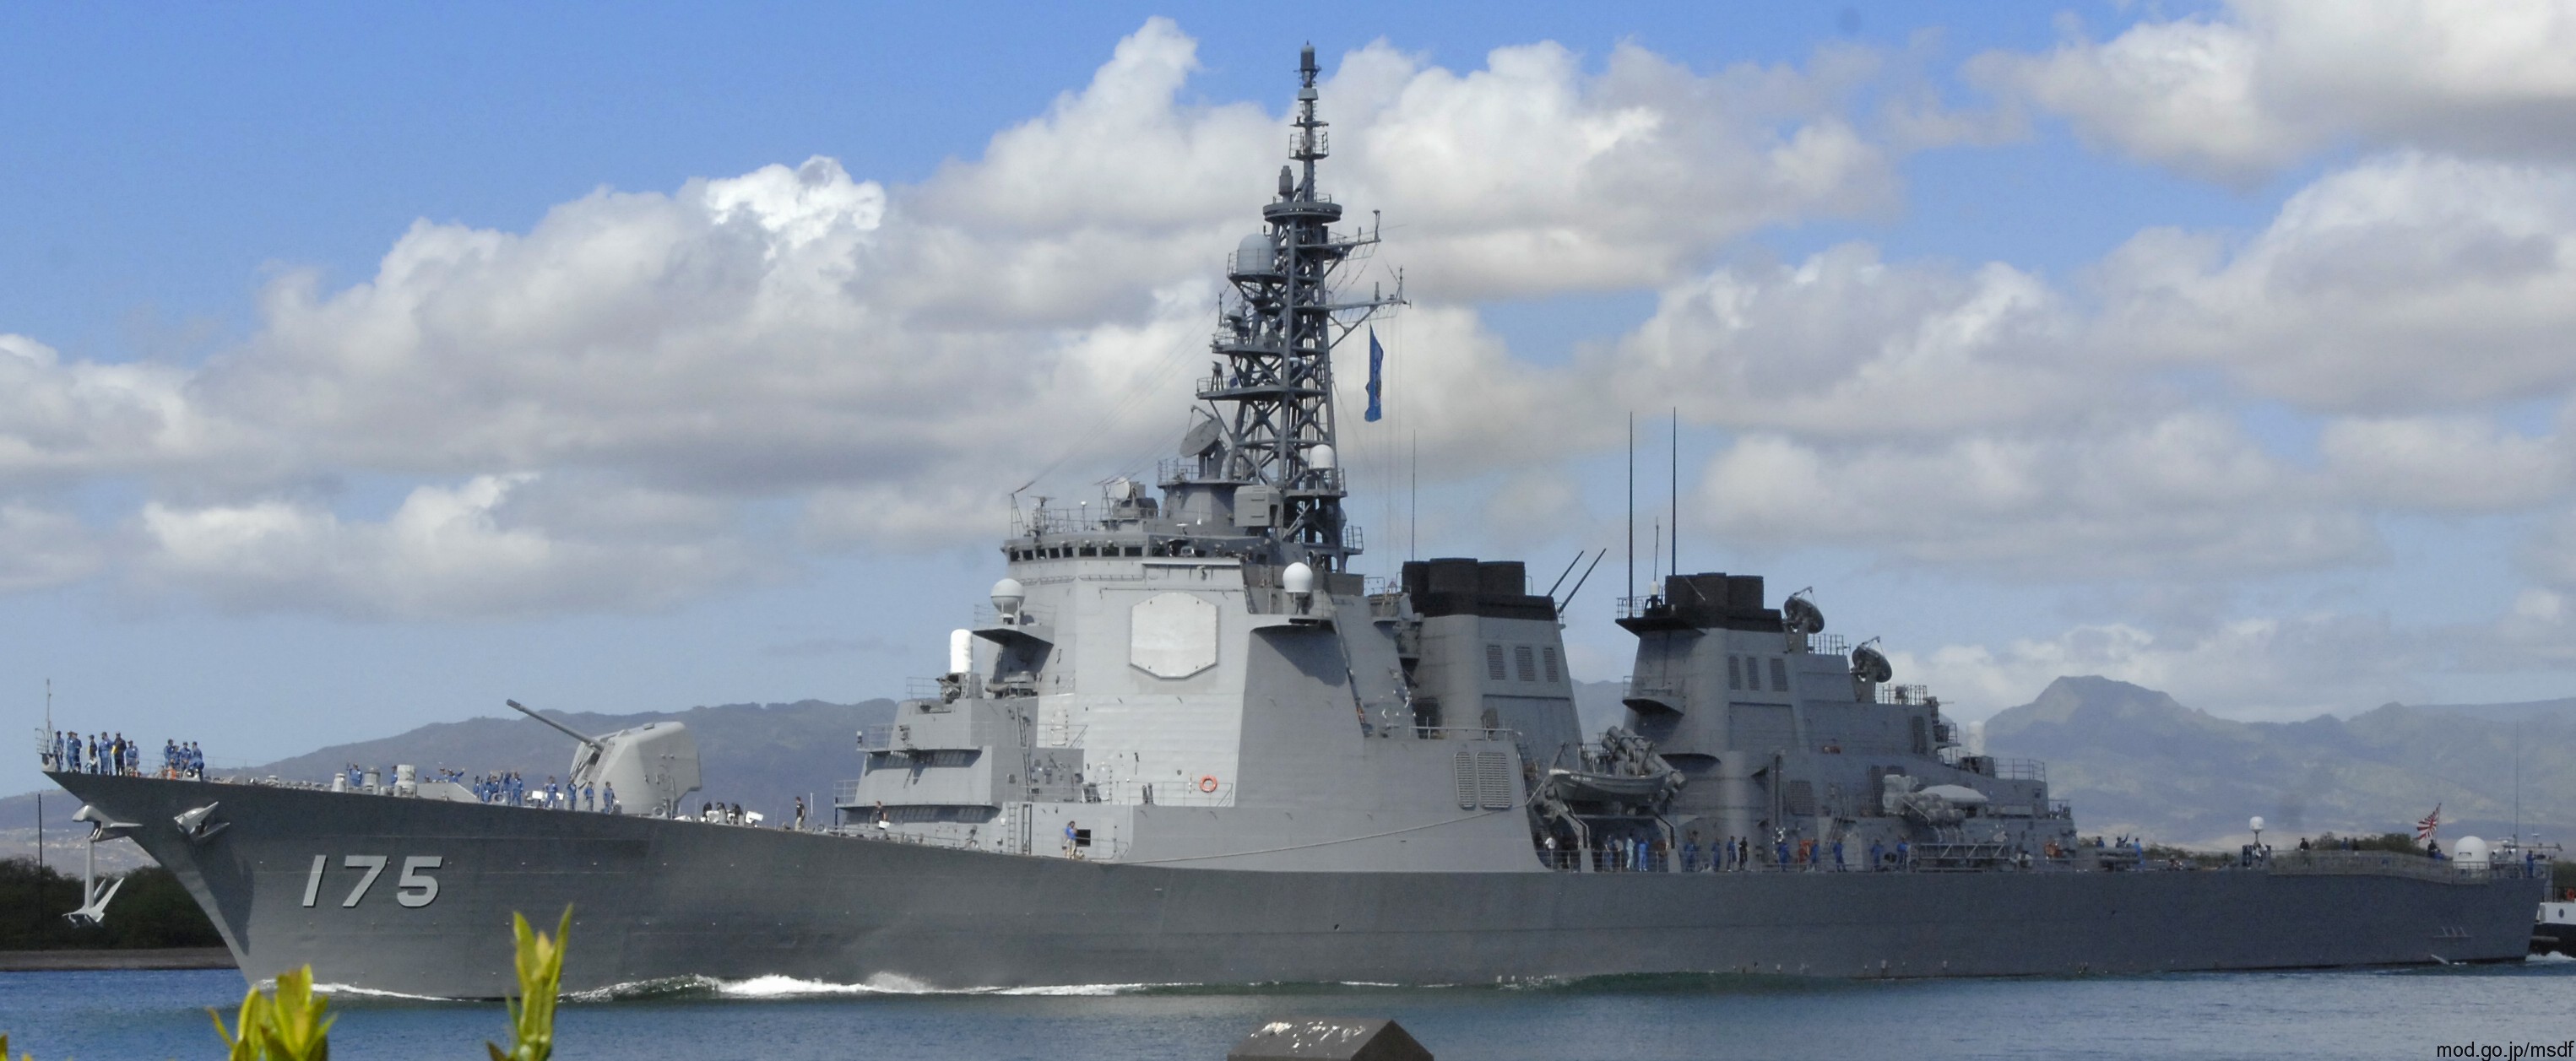 ddg-175 js myoko kongo class guided missile destroyer aegis japan maritime self defense force jmsdf 02